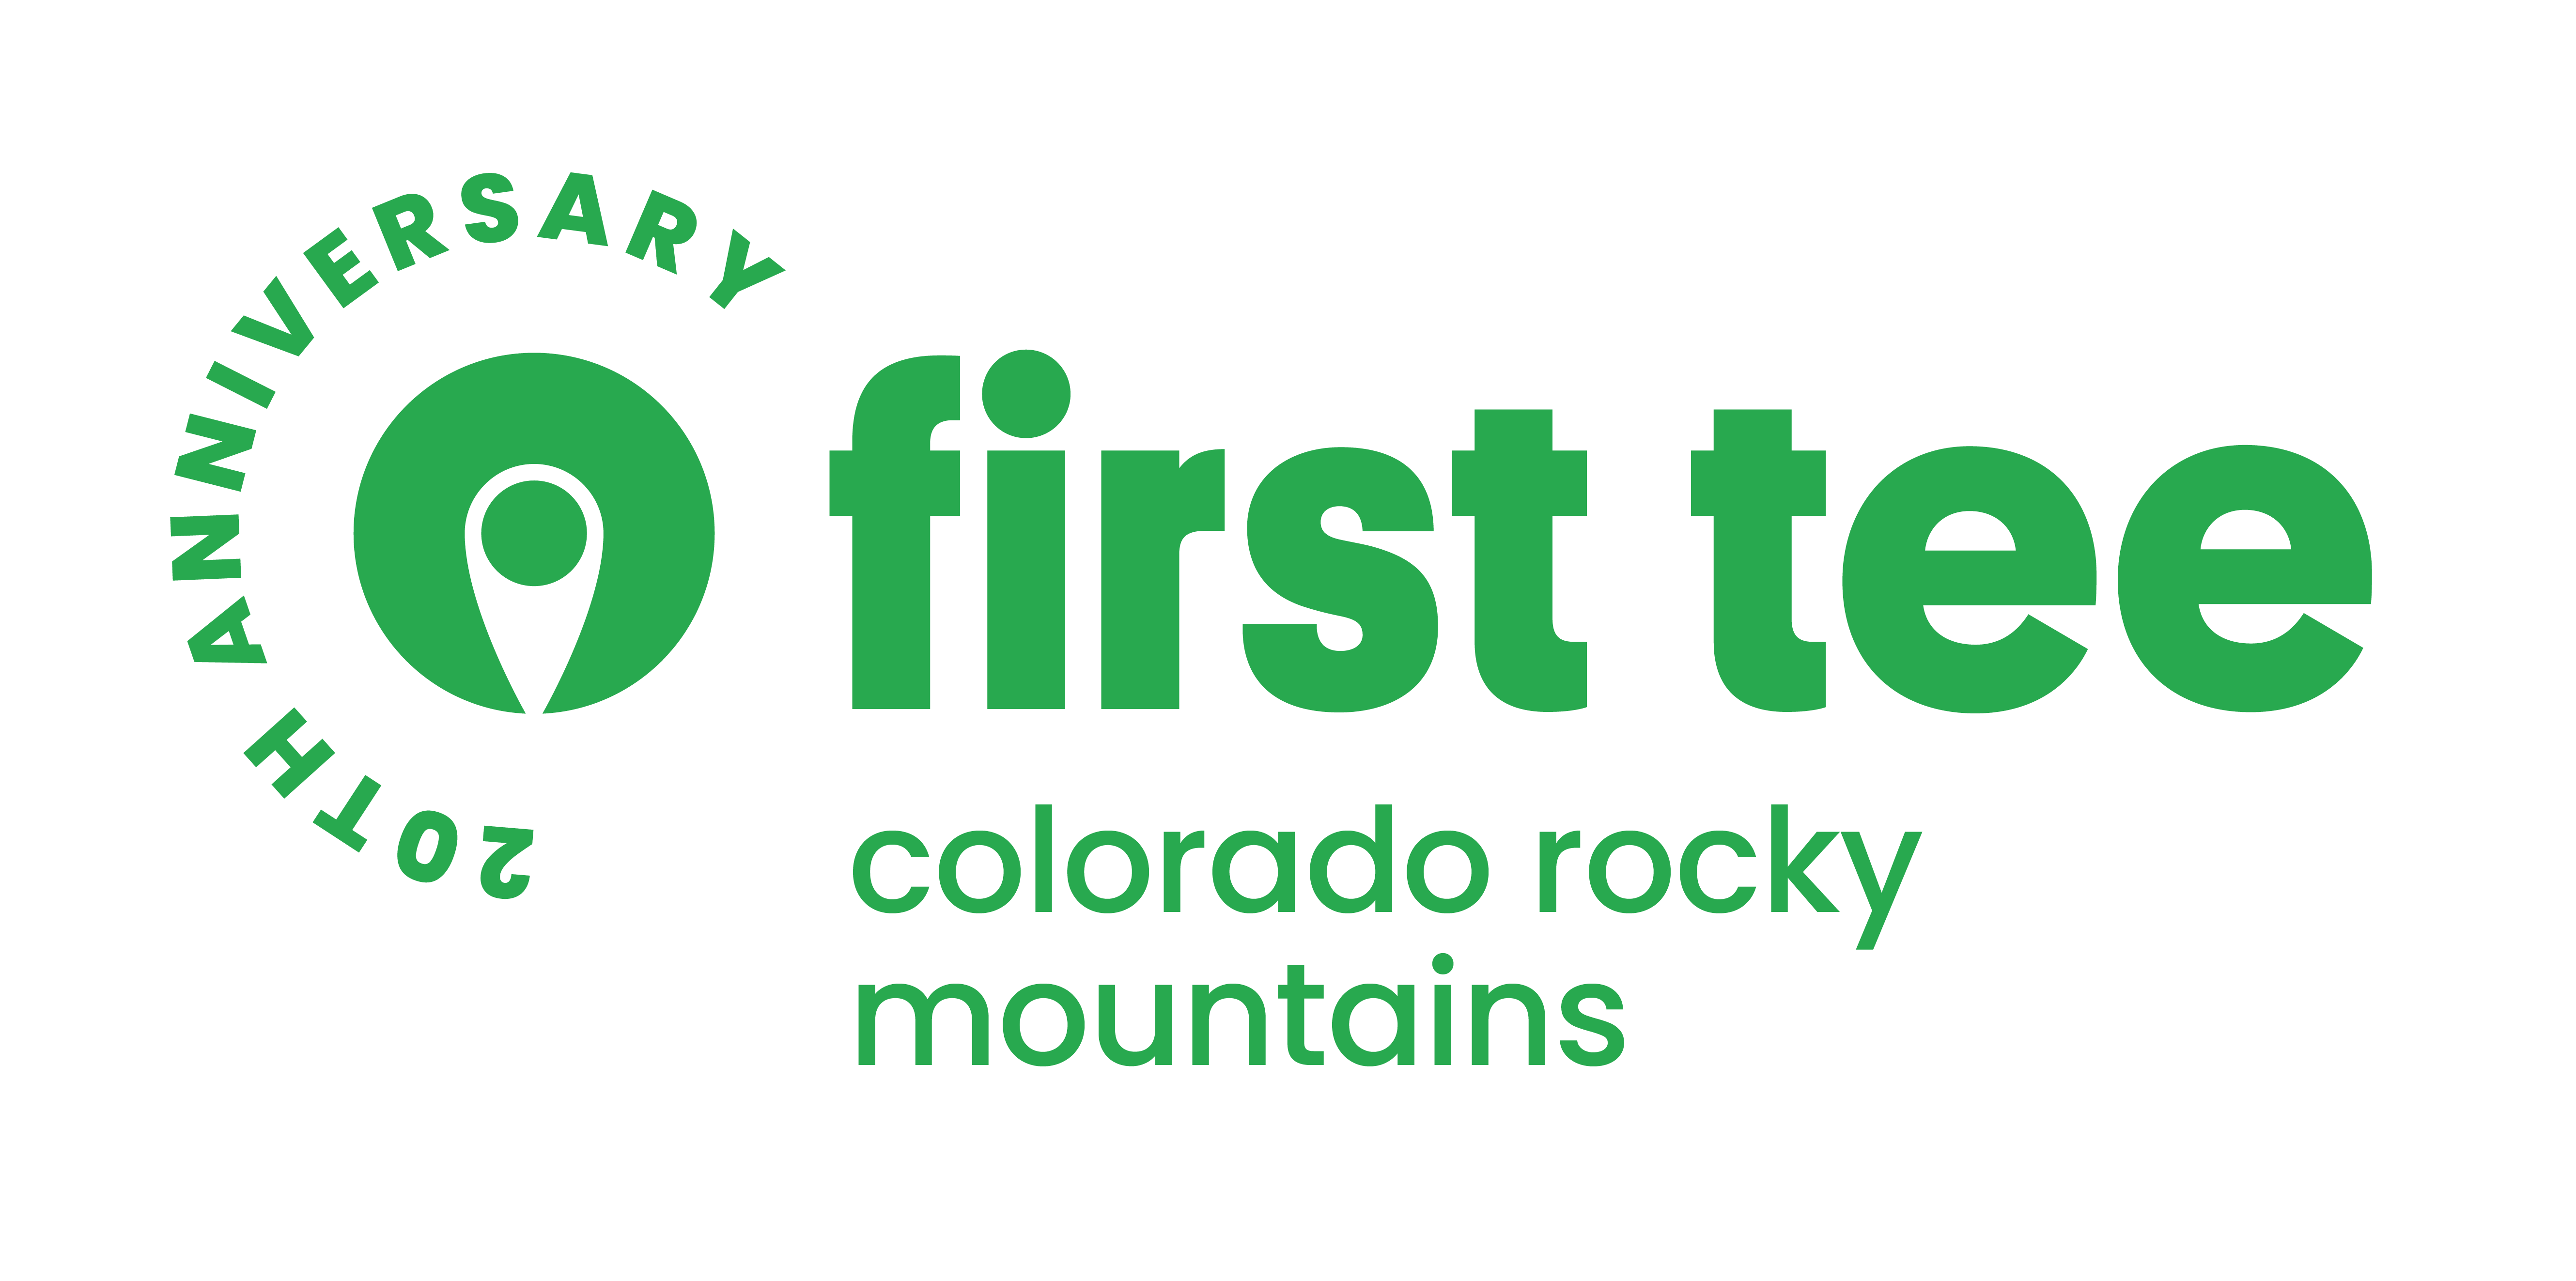 First Tee - Colorado Rocky Mountains 20th Anniversary Logo